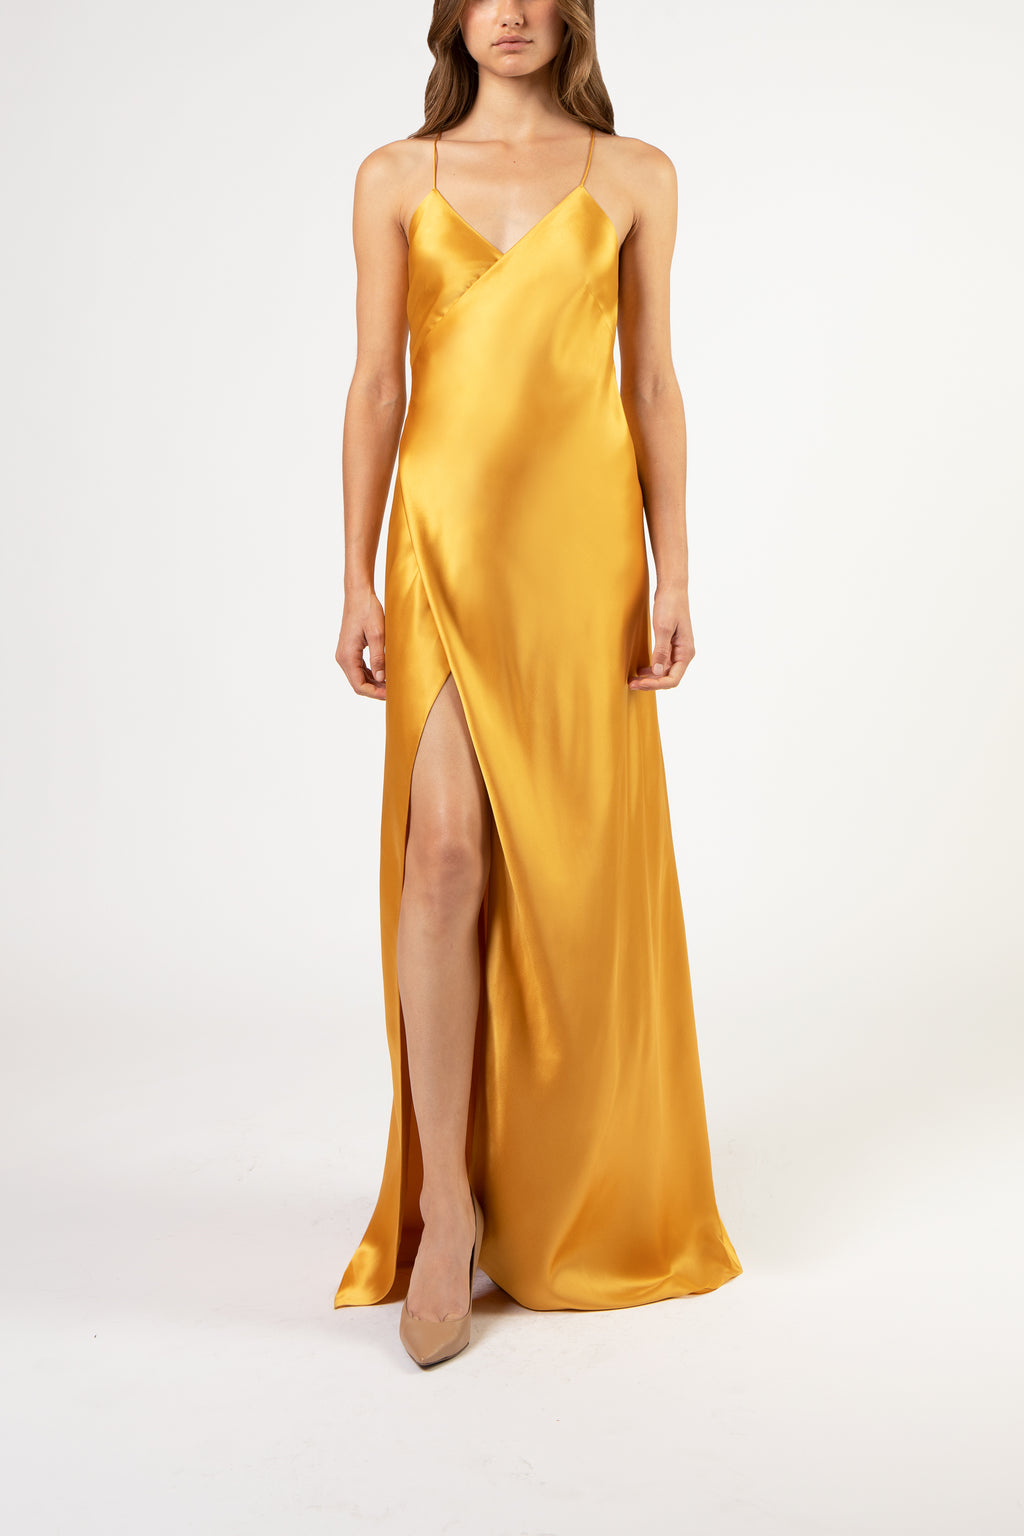 Sophie Hulme Gold Chain Sleeveless Silk Shirt, $455